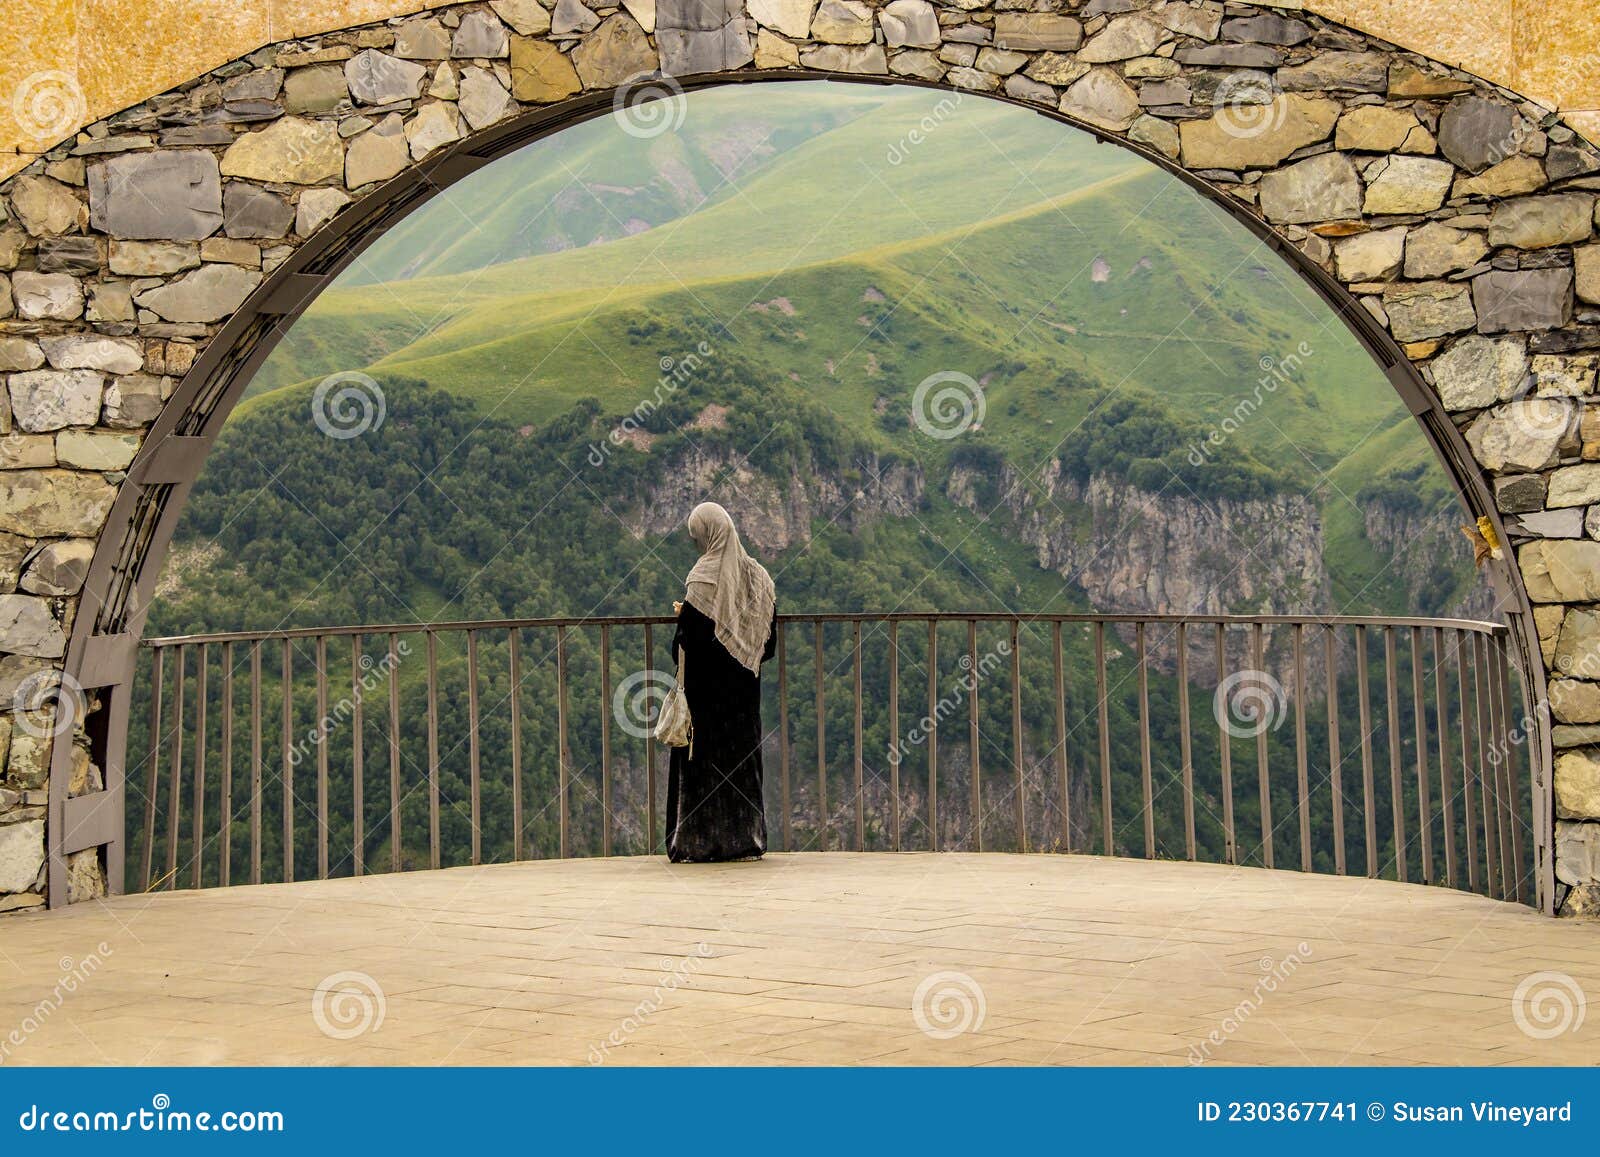 female tourist in abaya and hijÃÂb checks phone standing in arch of georgia friendship monument on military highway with beautiful